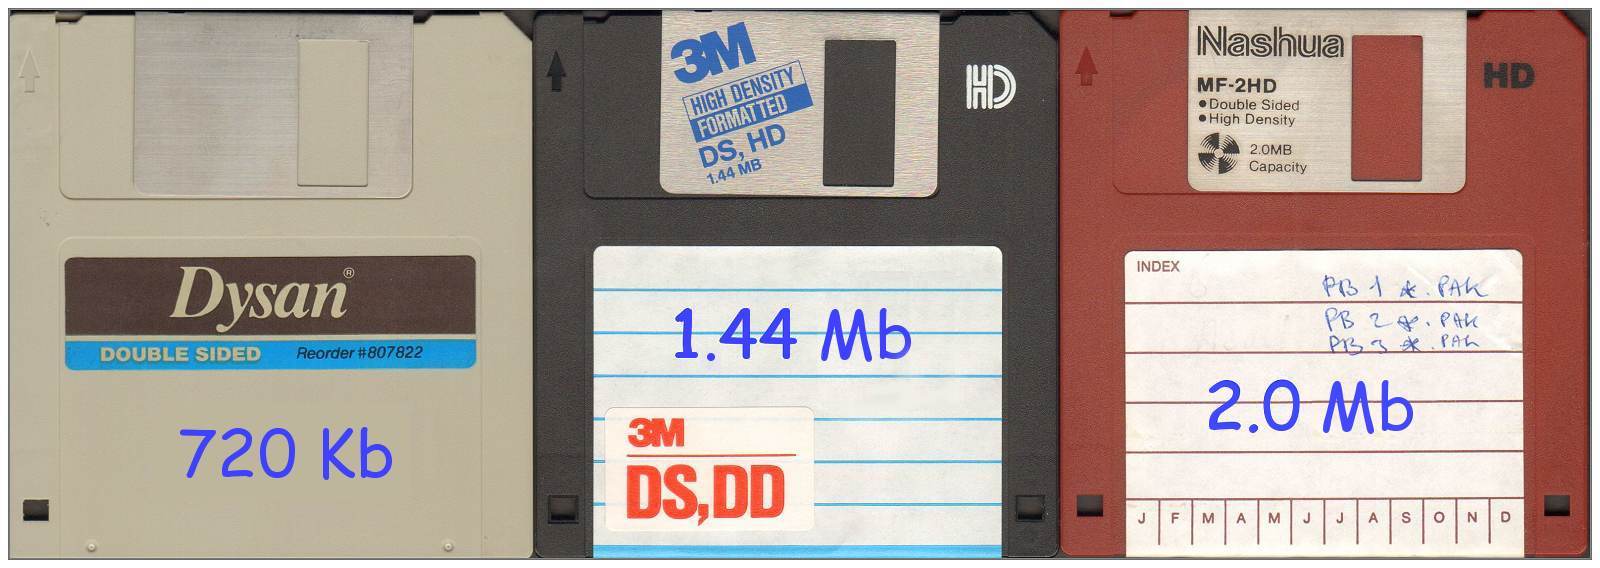 3½-inch Floppy disks - 720Kb - 1.44Mb - 2.0Mb capacity